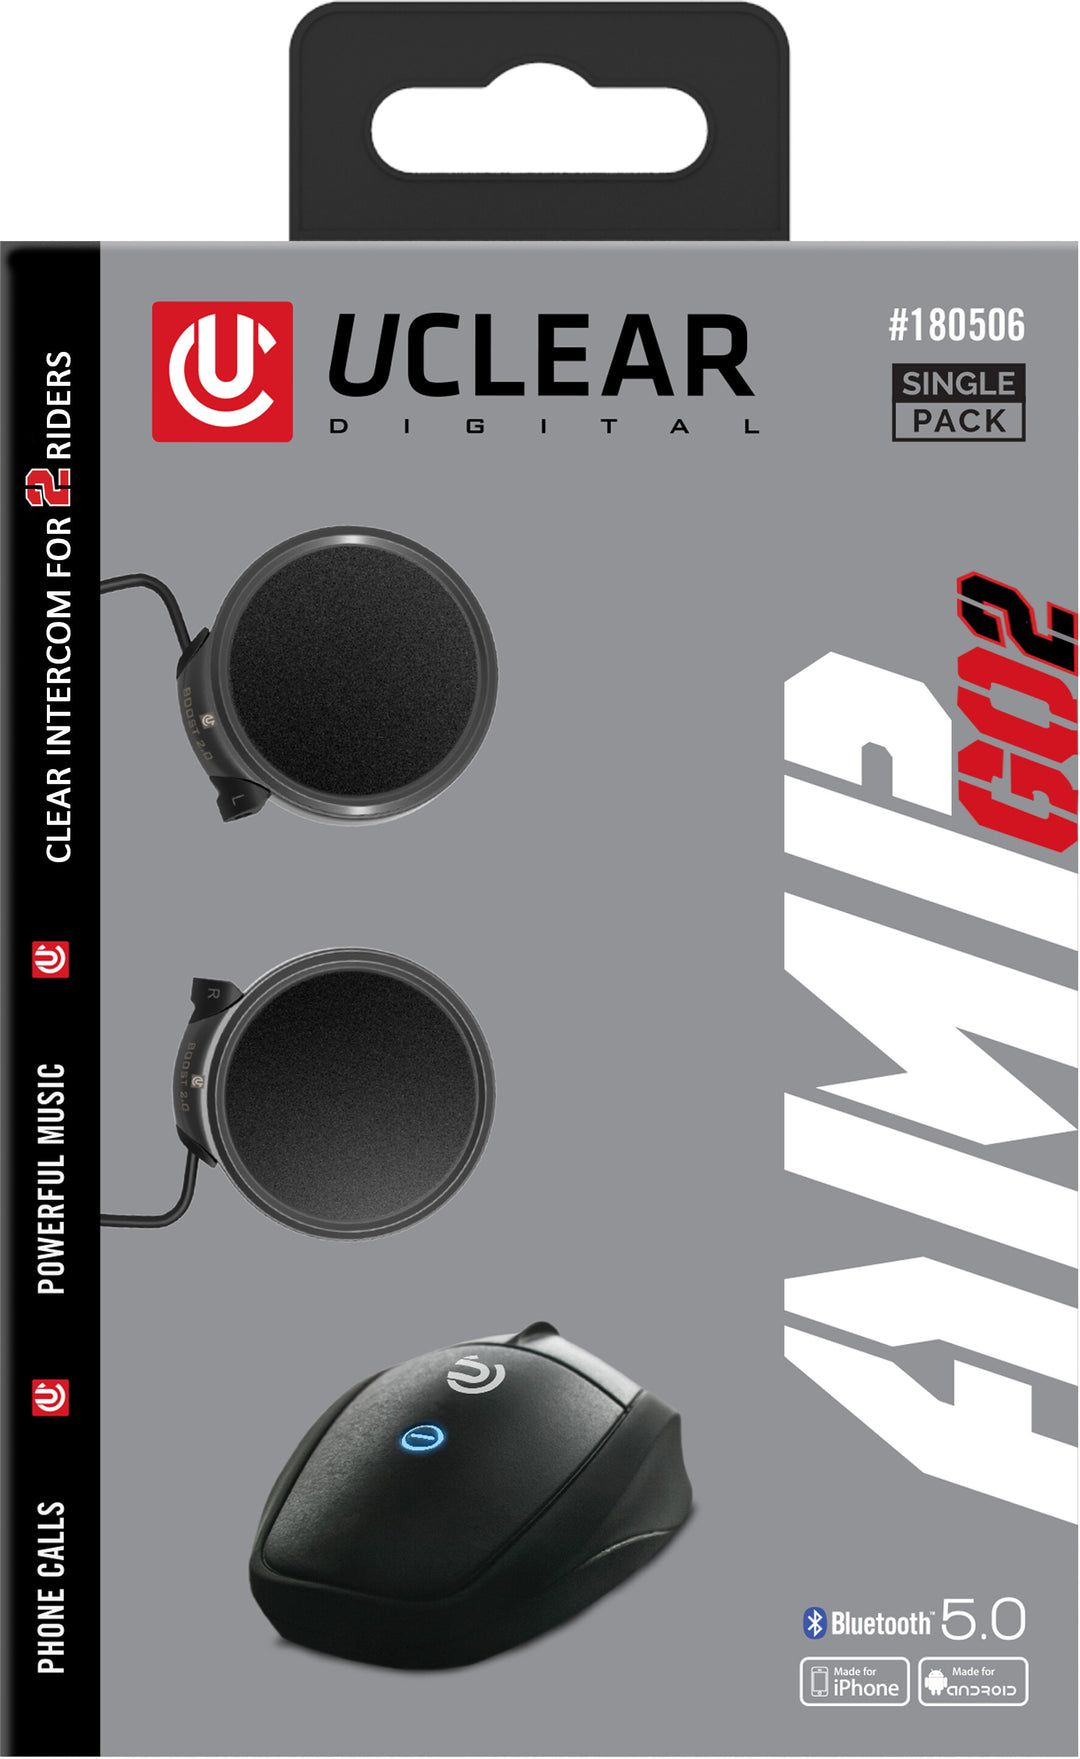 UCLEAR AMP Go Bluetooth Helmet Audio System